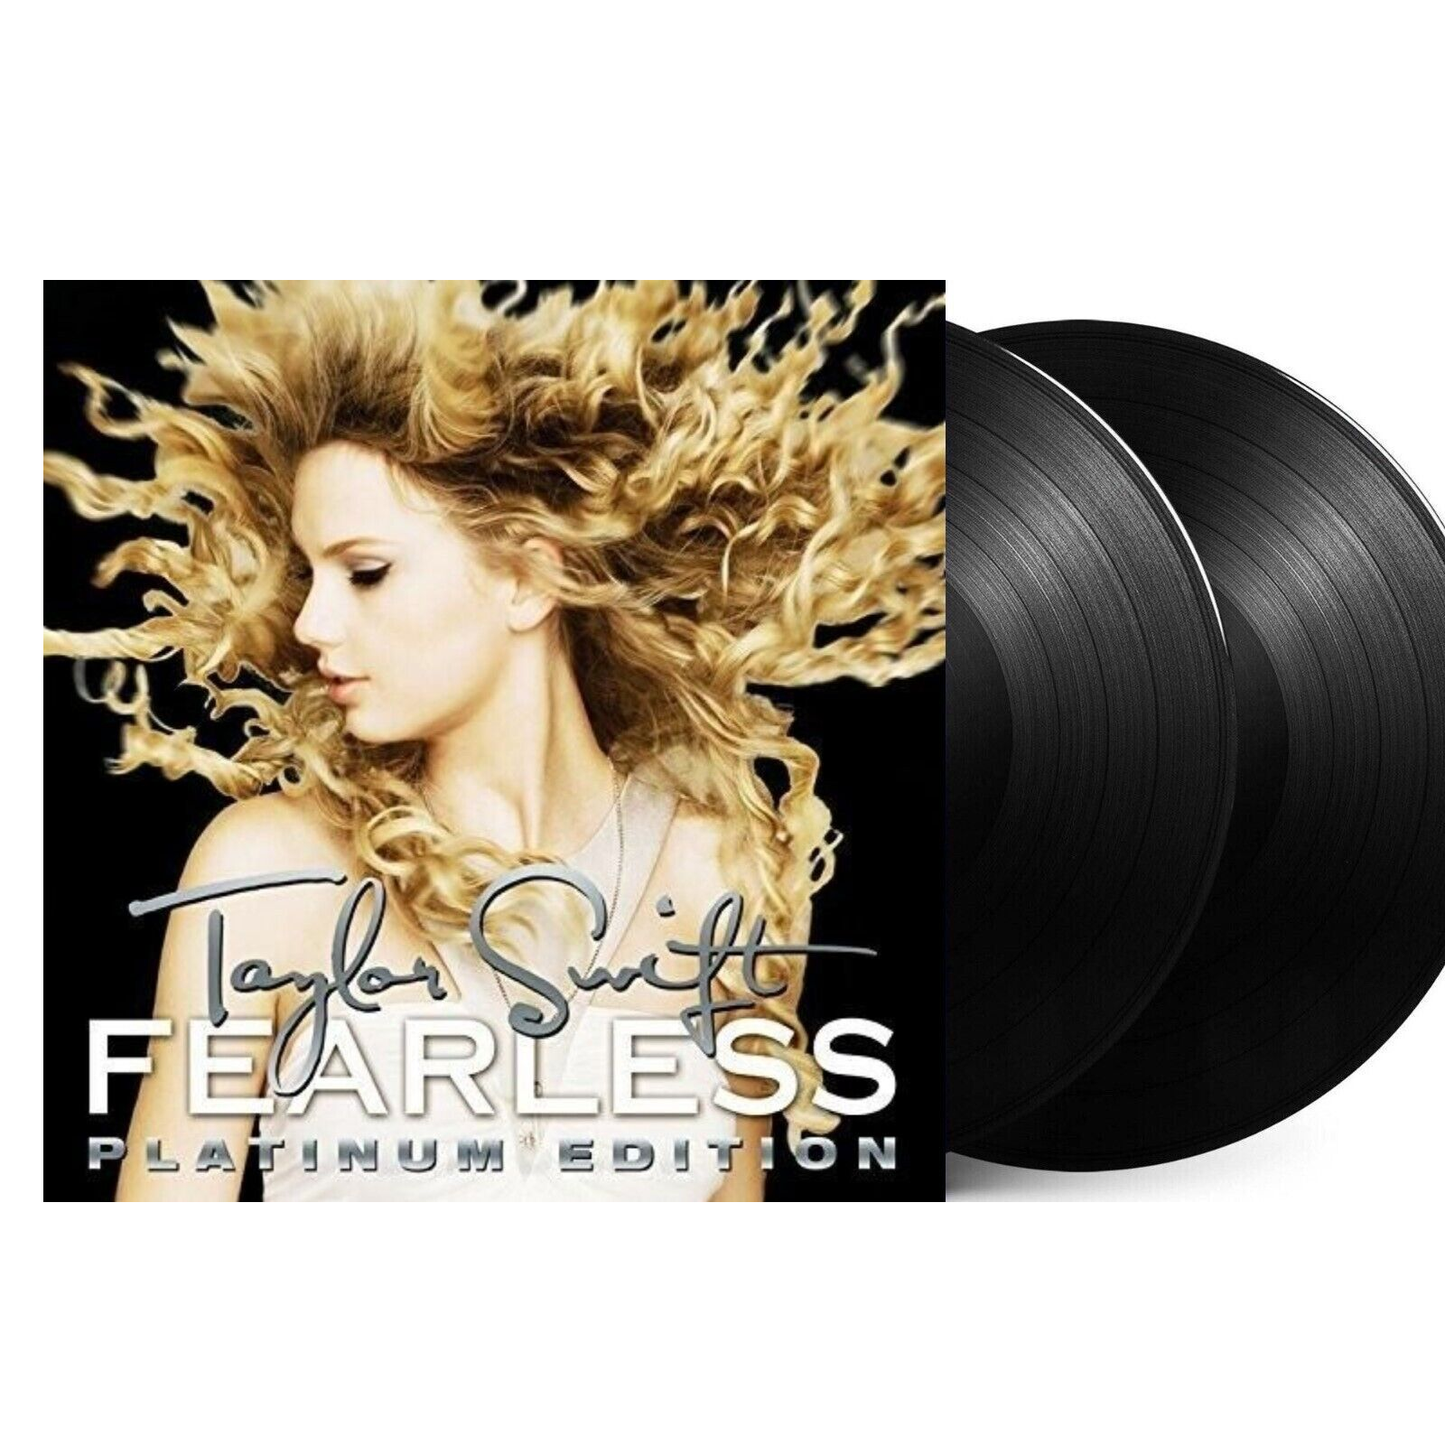 Taylor Swift - Fearless (Platinum Edition Vinyl)